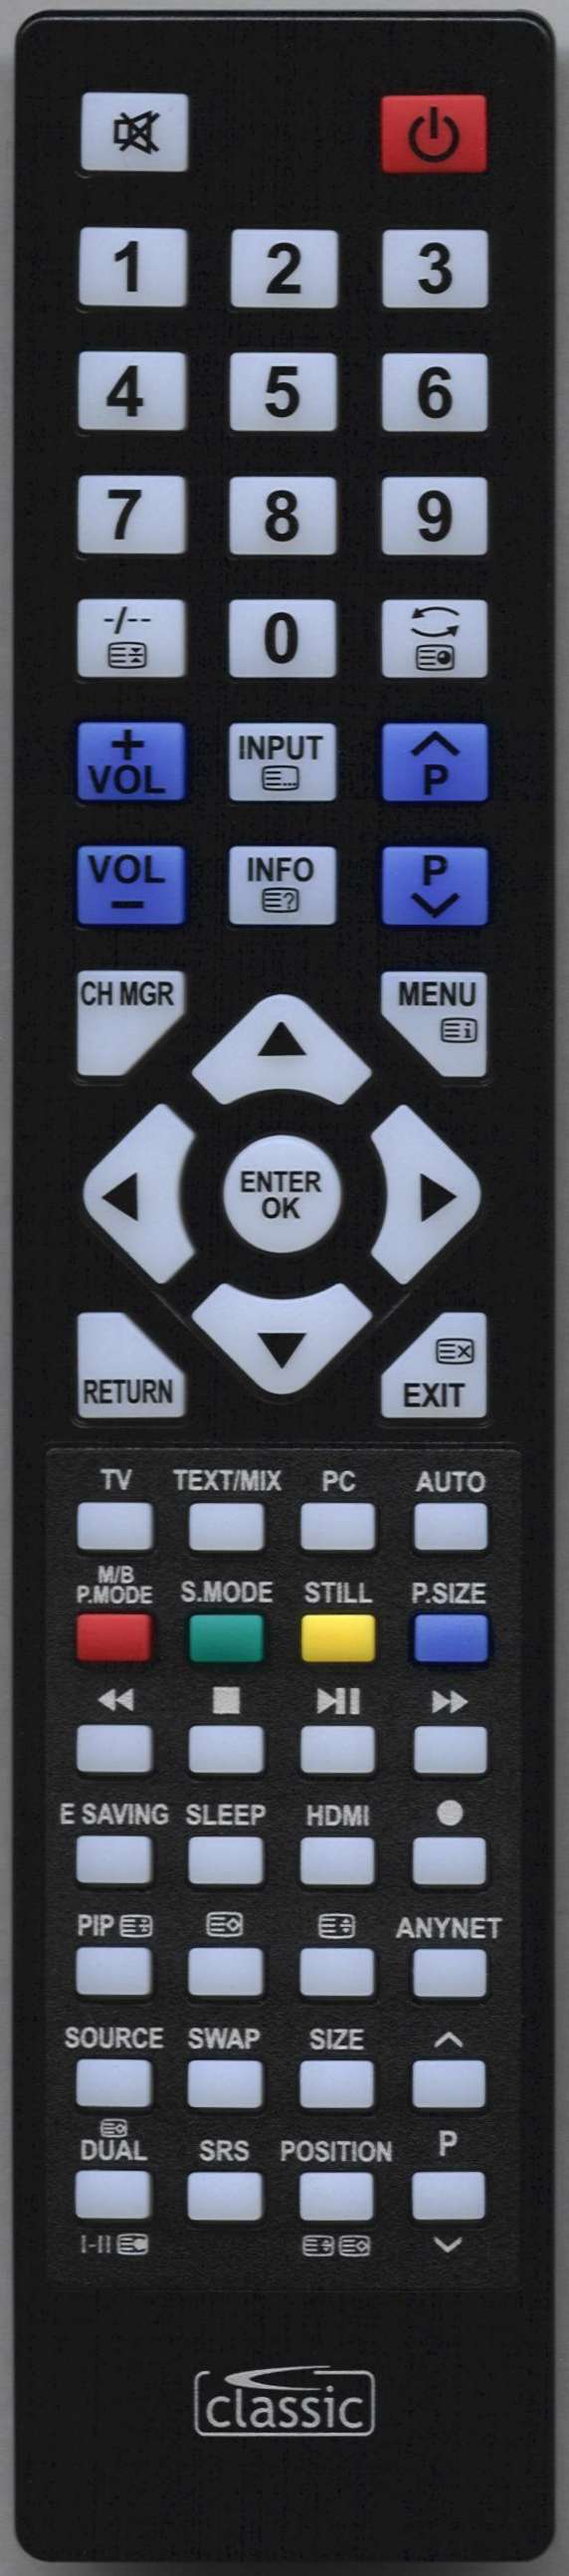 SAMSUNG PS50Q91HX/UMG Remote Control